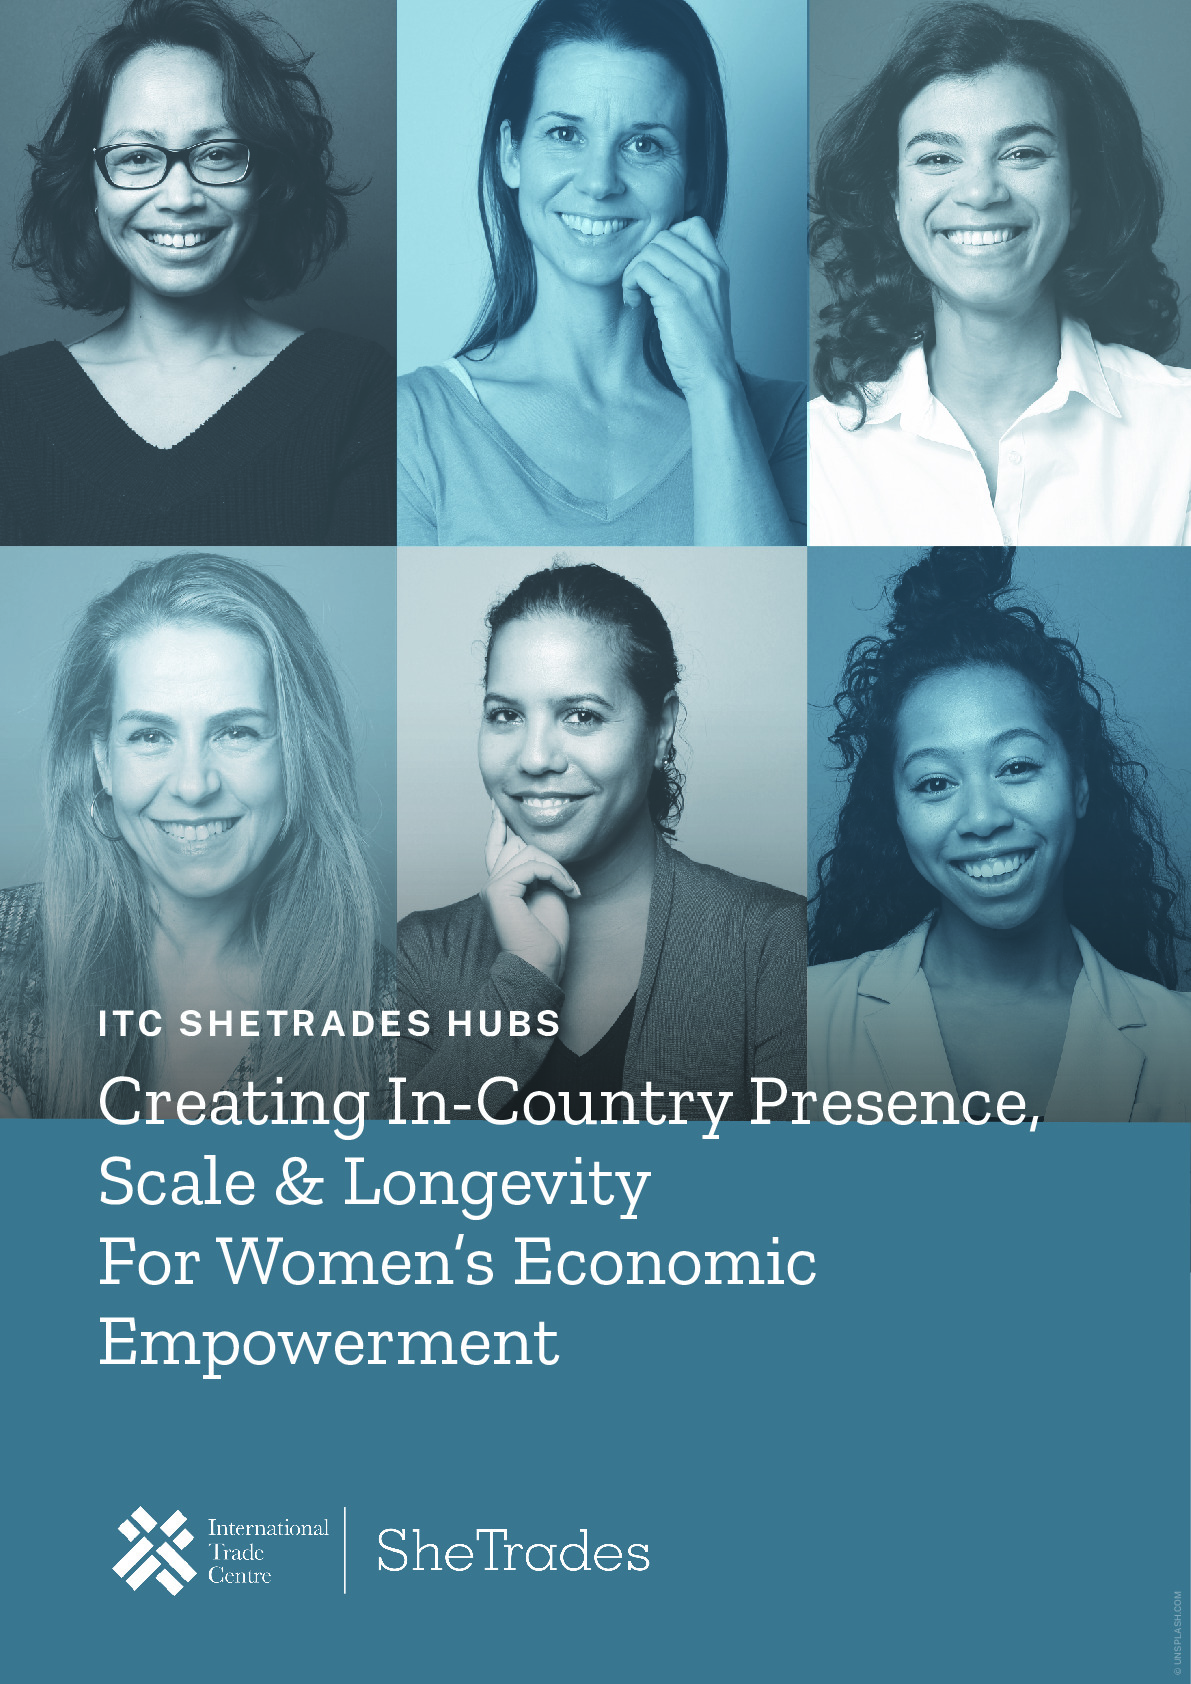 shetrades_hubs_womens_economic_empowerment_brochure_08-apr_digital